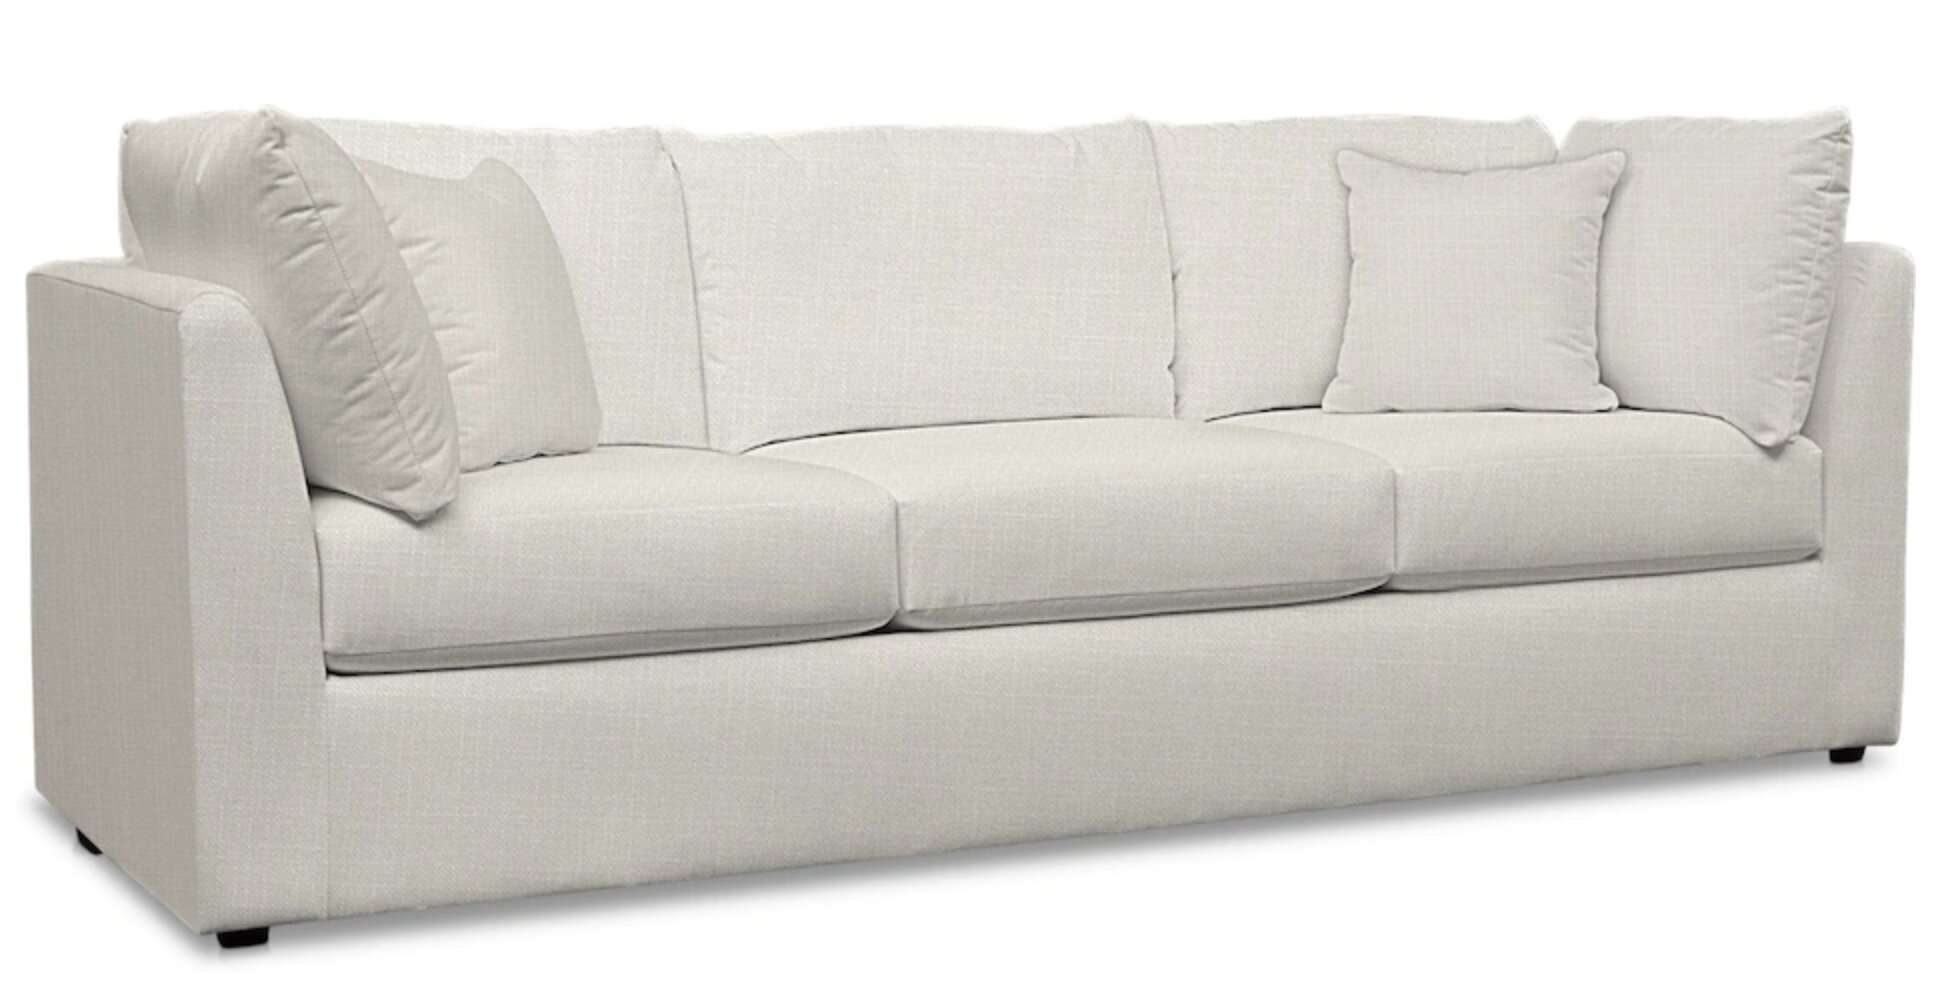 white modern sofa